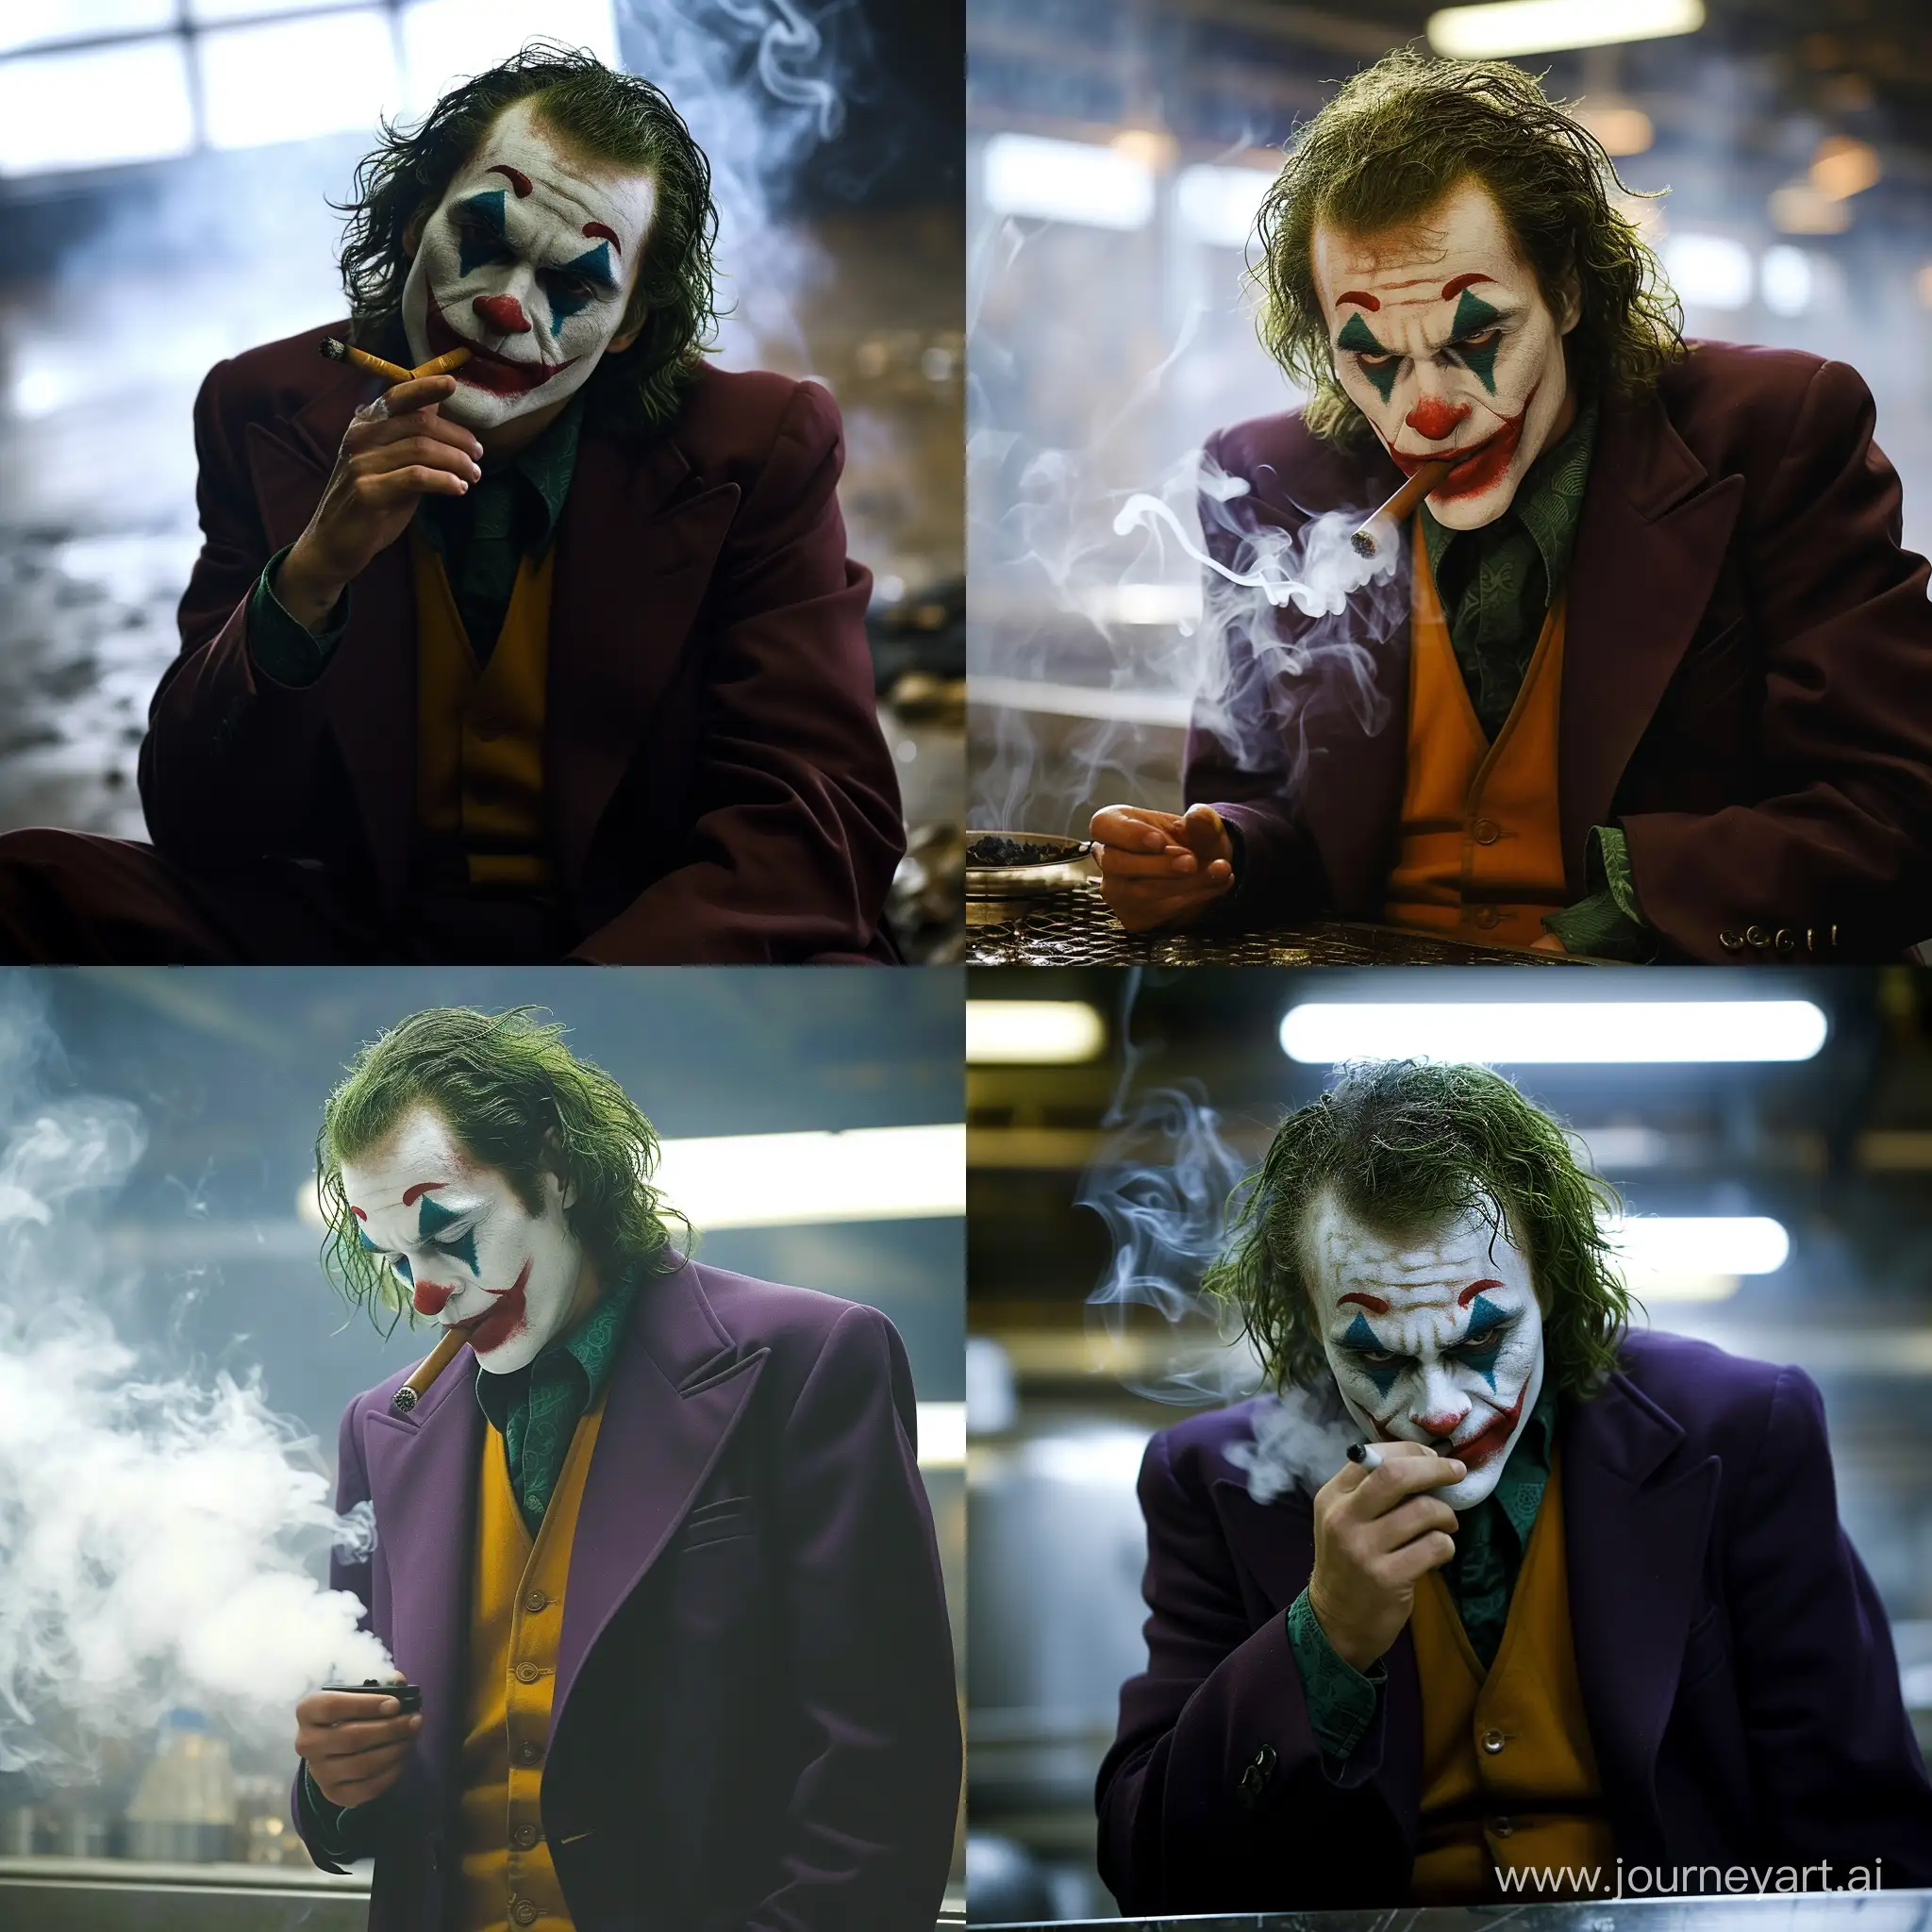 Heath-Ledger-Joker-Smoking-in-Dark-Fantasy-Setting